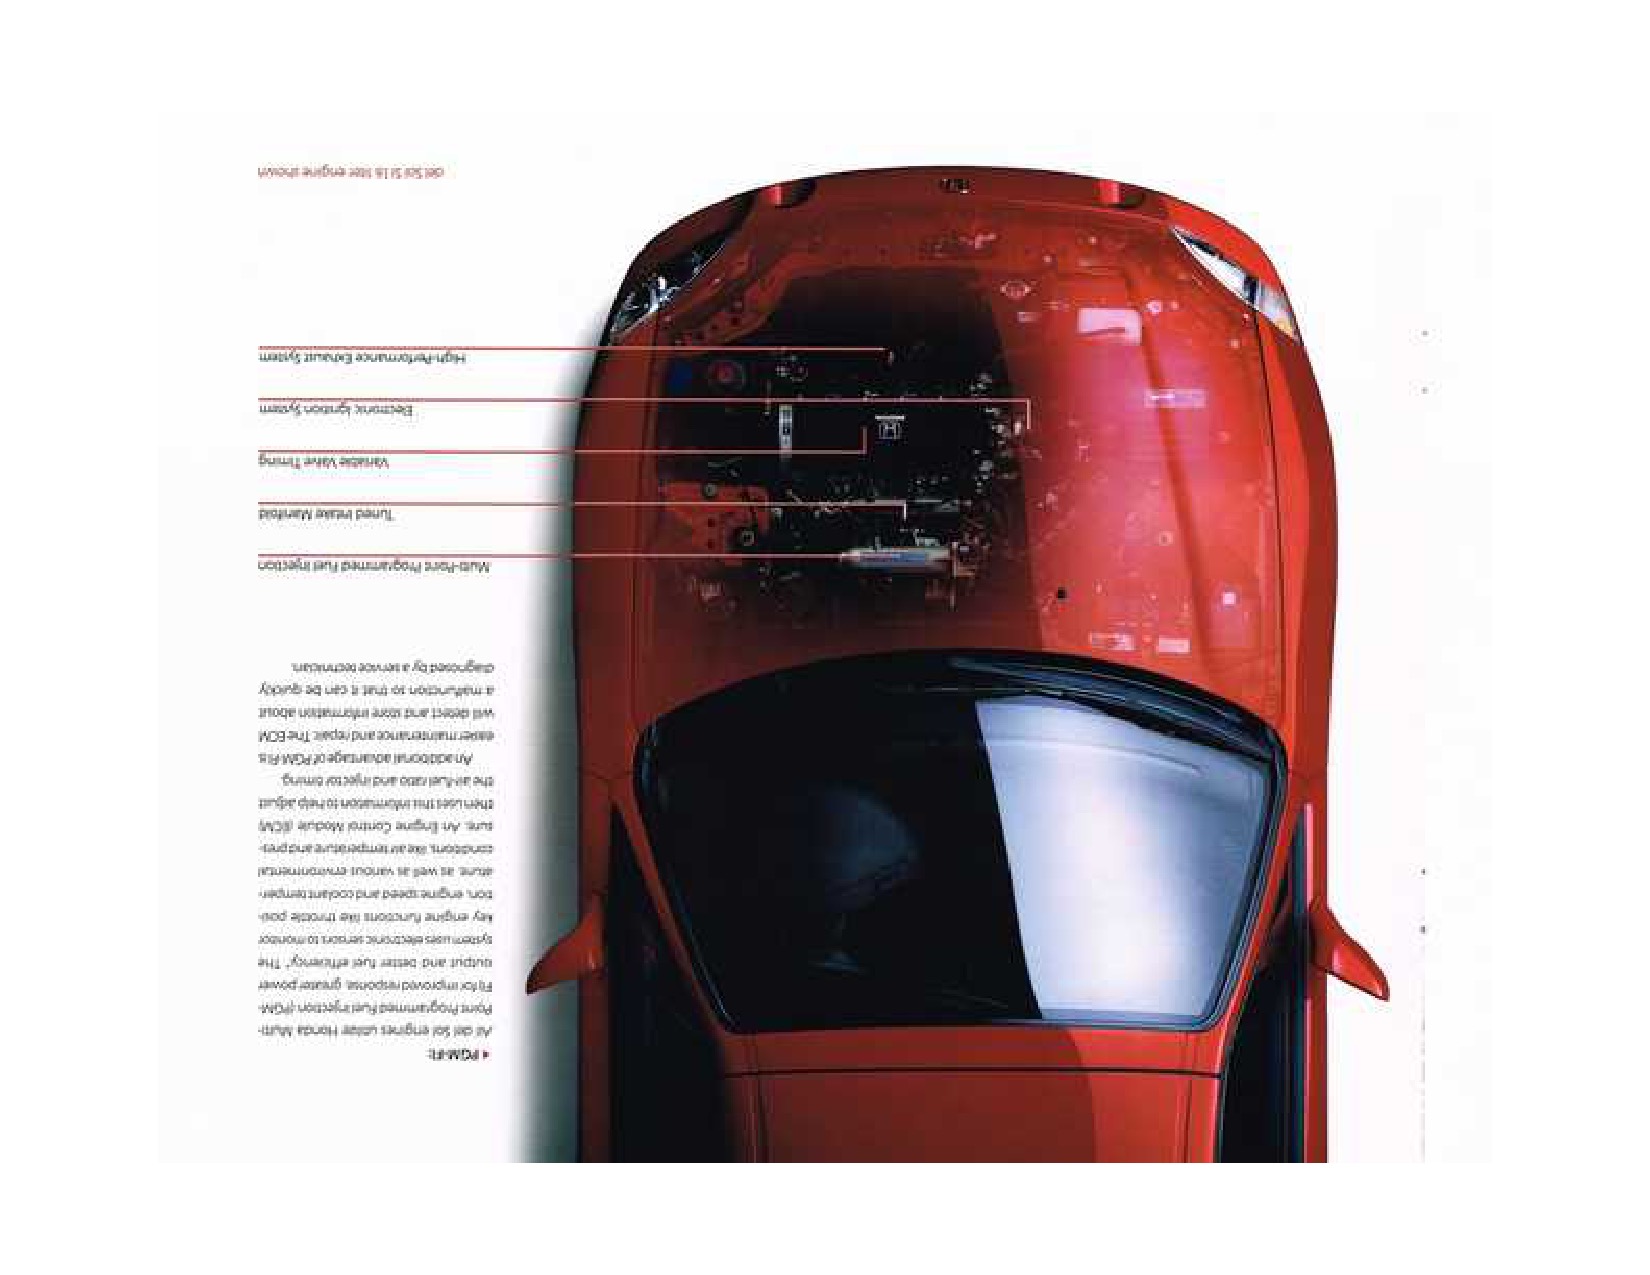 1993 Honda Civic delSol Brochure Page 7